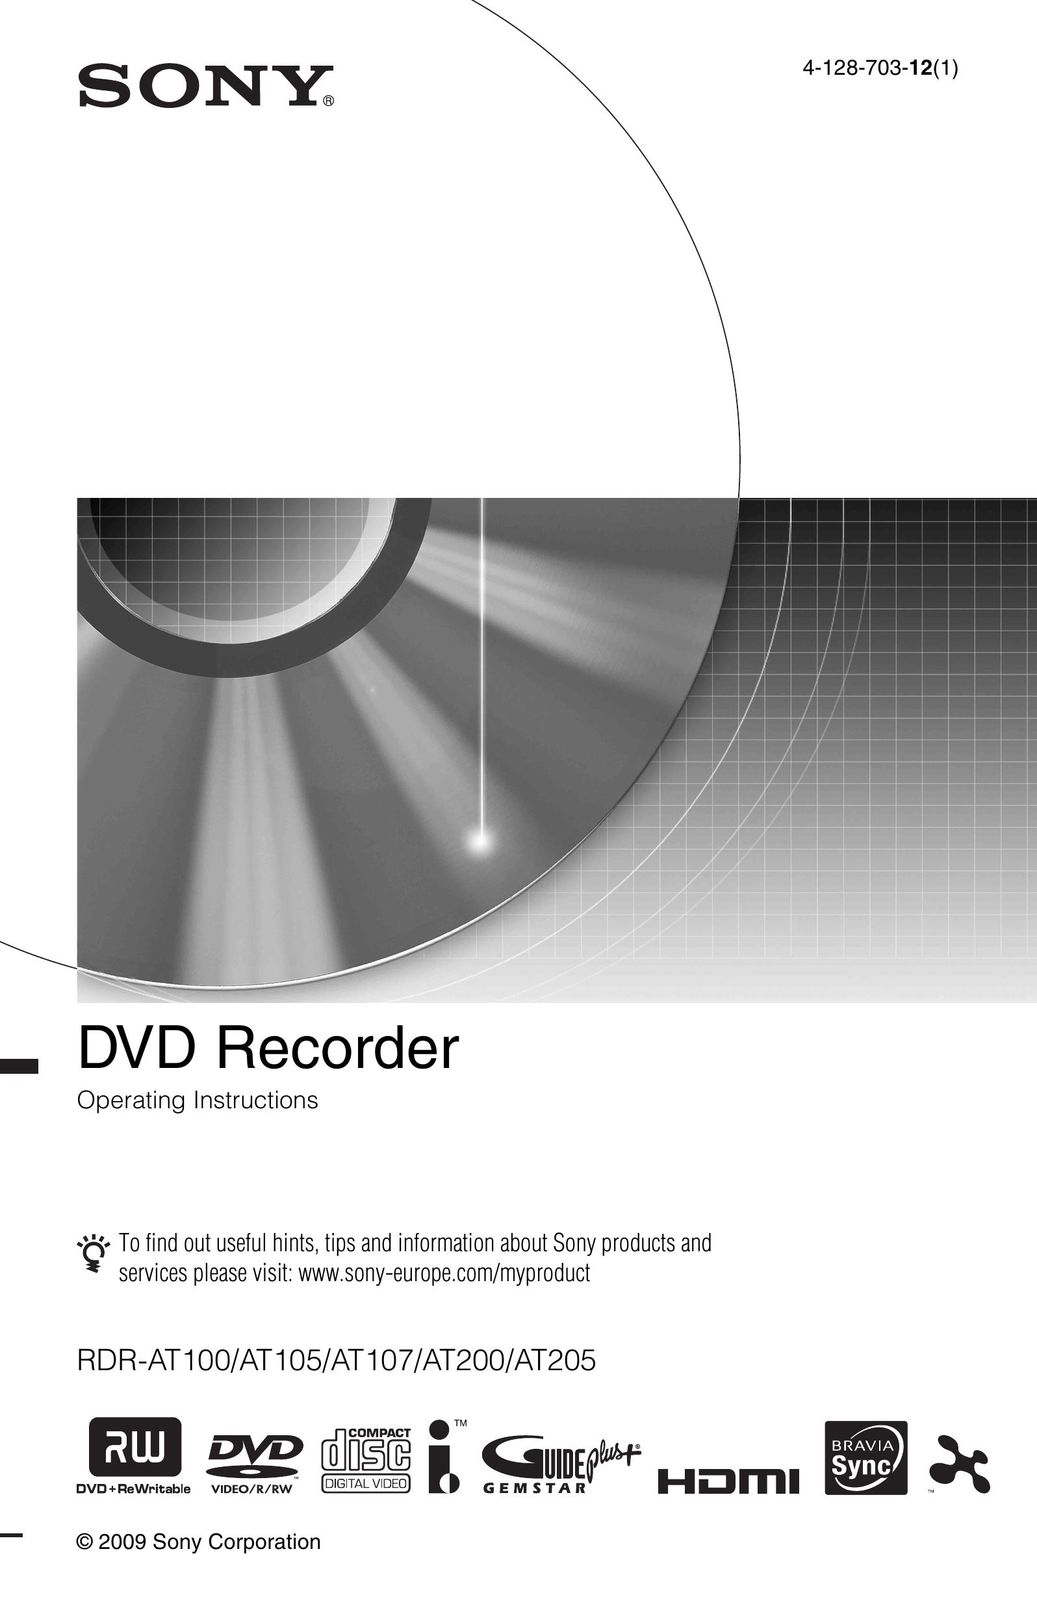 Sony AT105 DVD Recorder User Manual